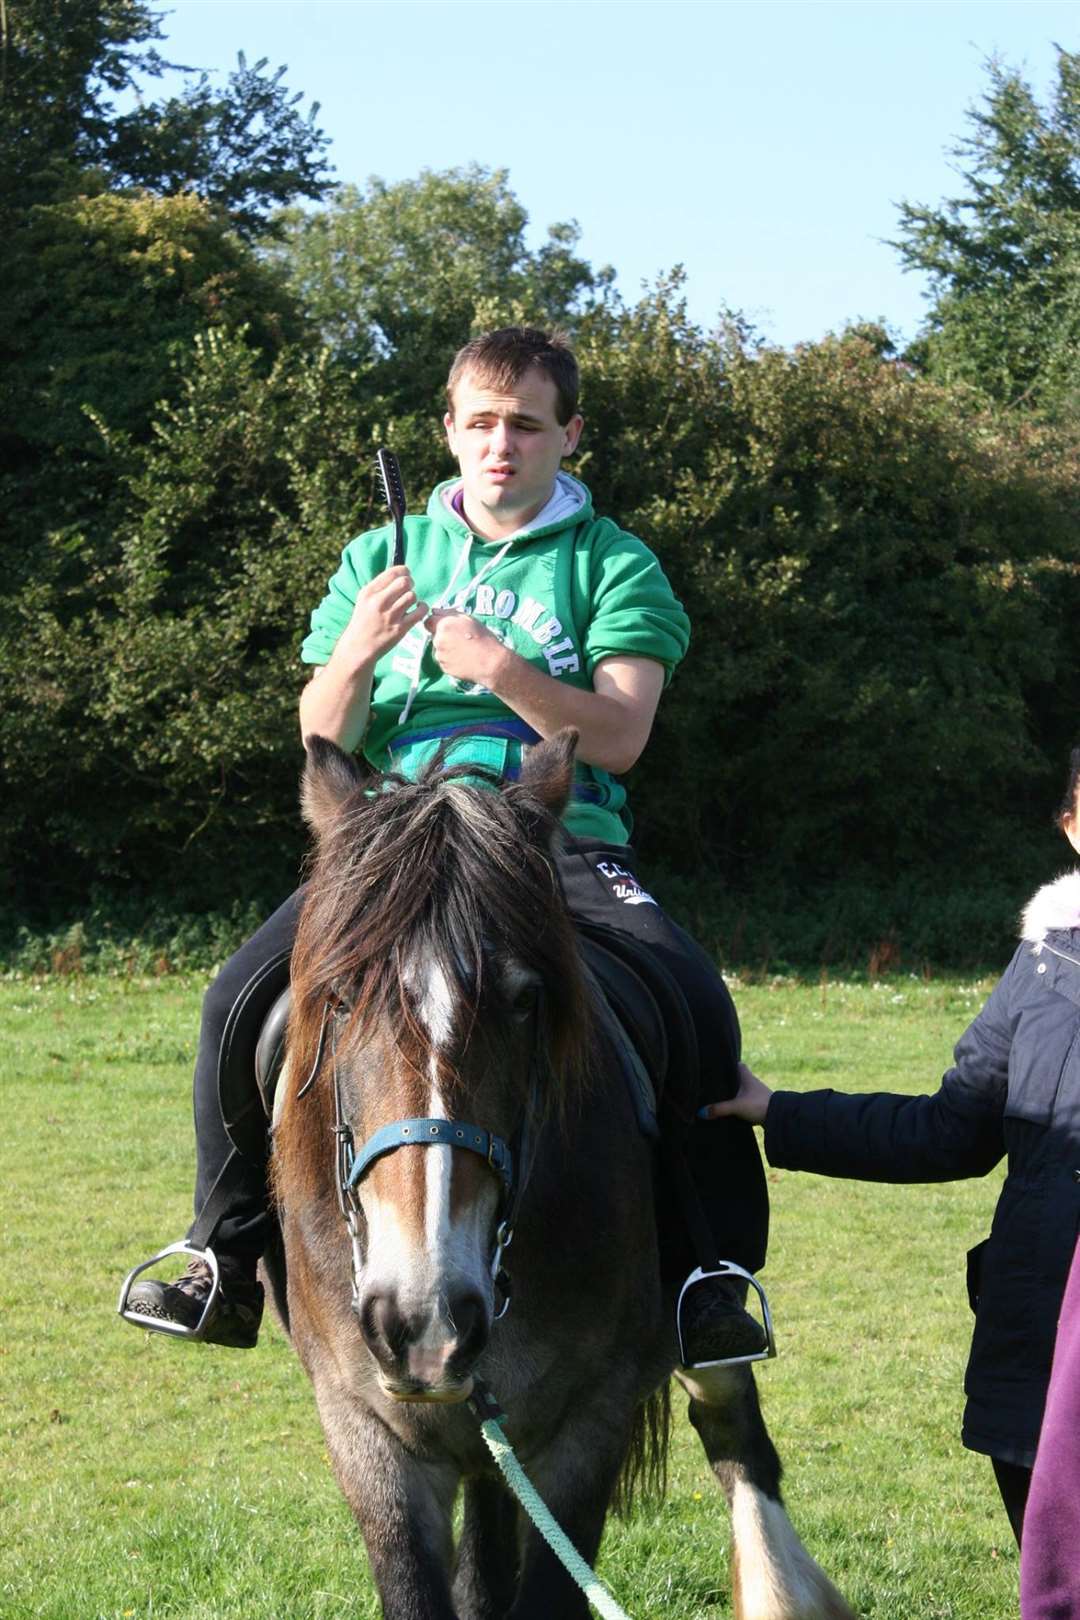 Ryan Crutchfield riding a horse at the centre